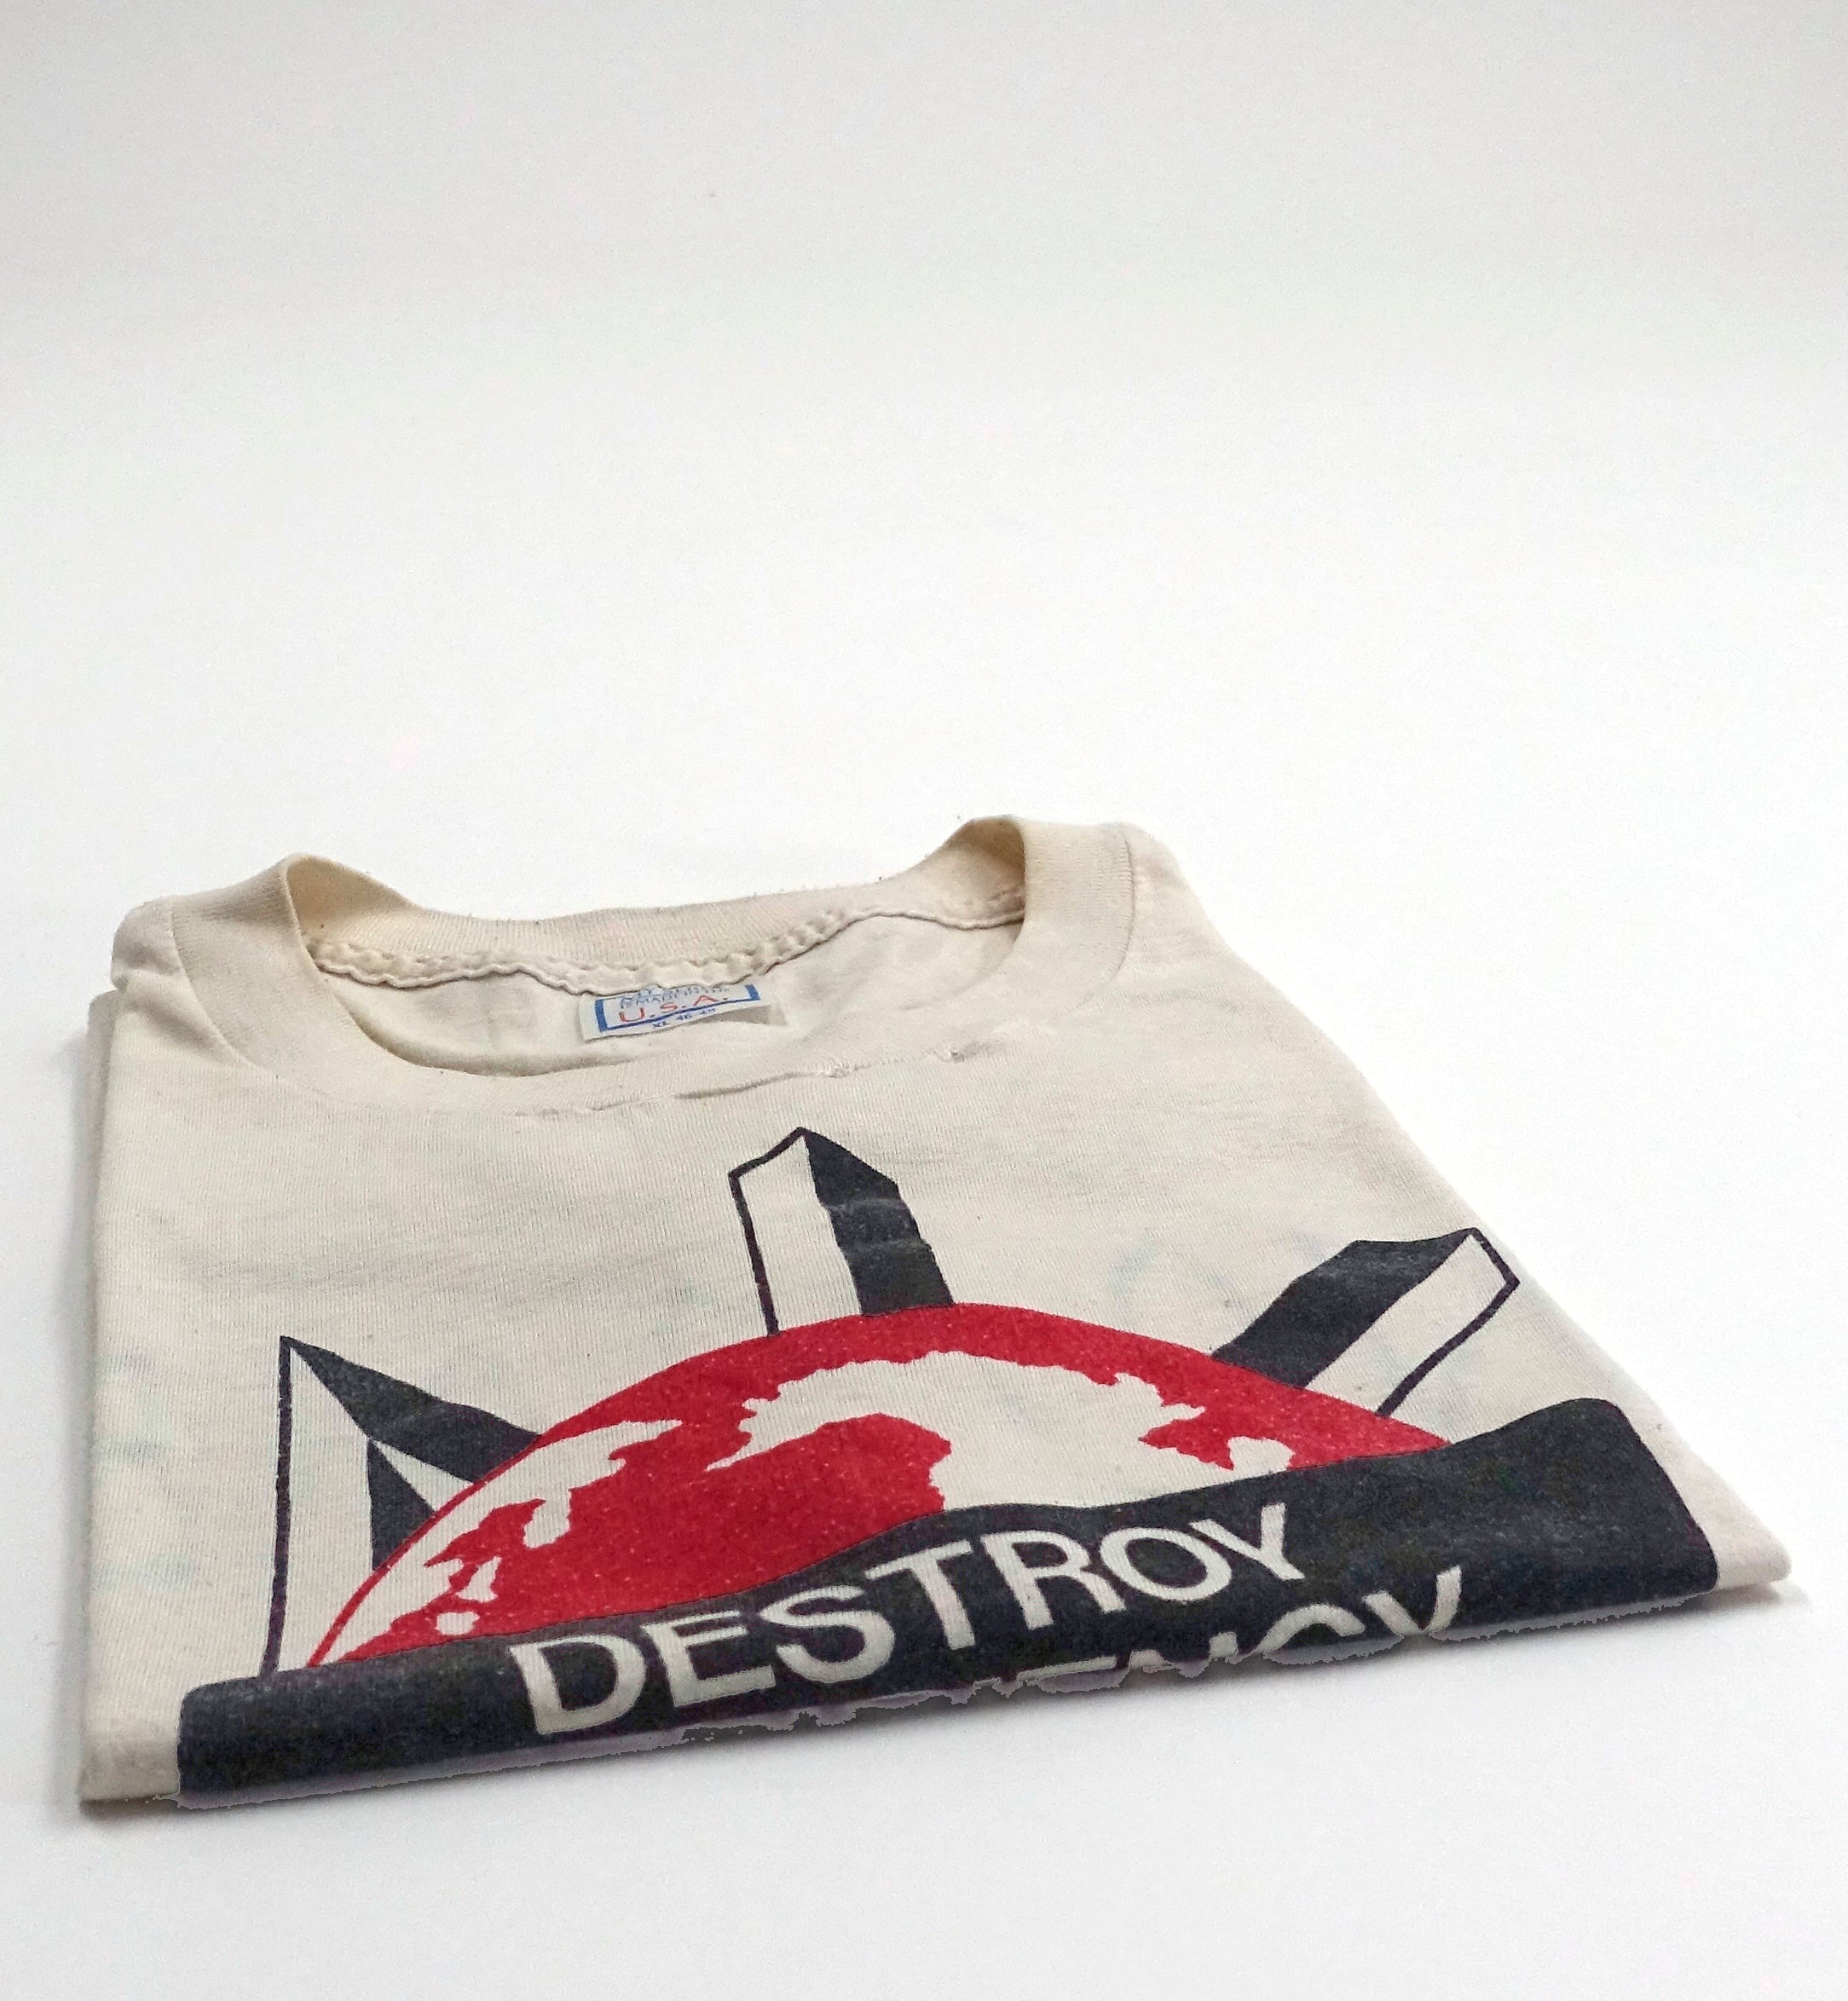 Dead Kennedys - Destroy Efficiency 80s Shirt Size XL